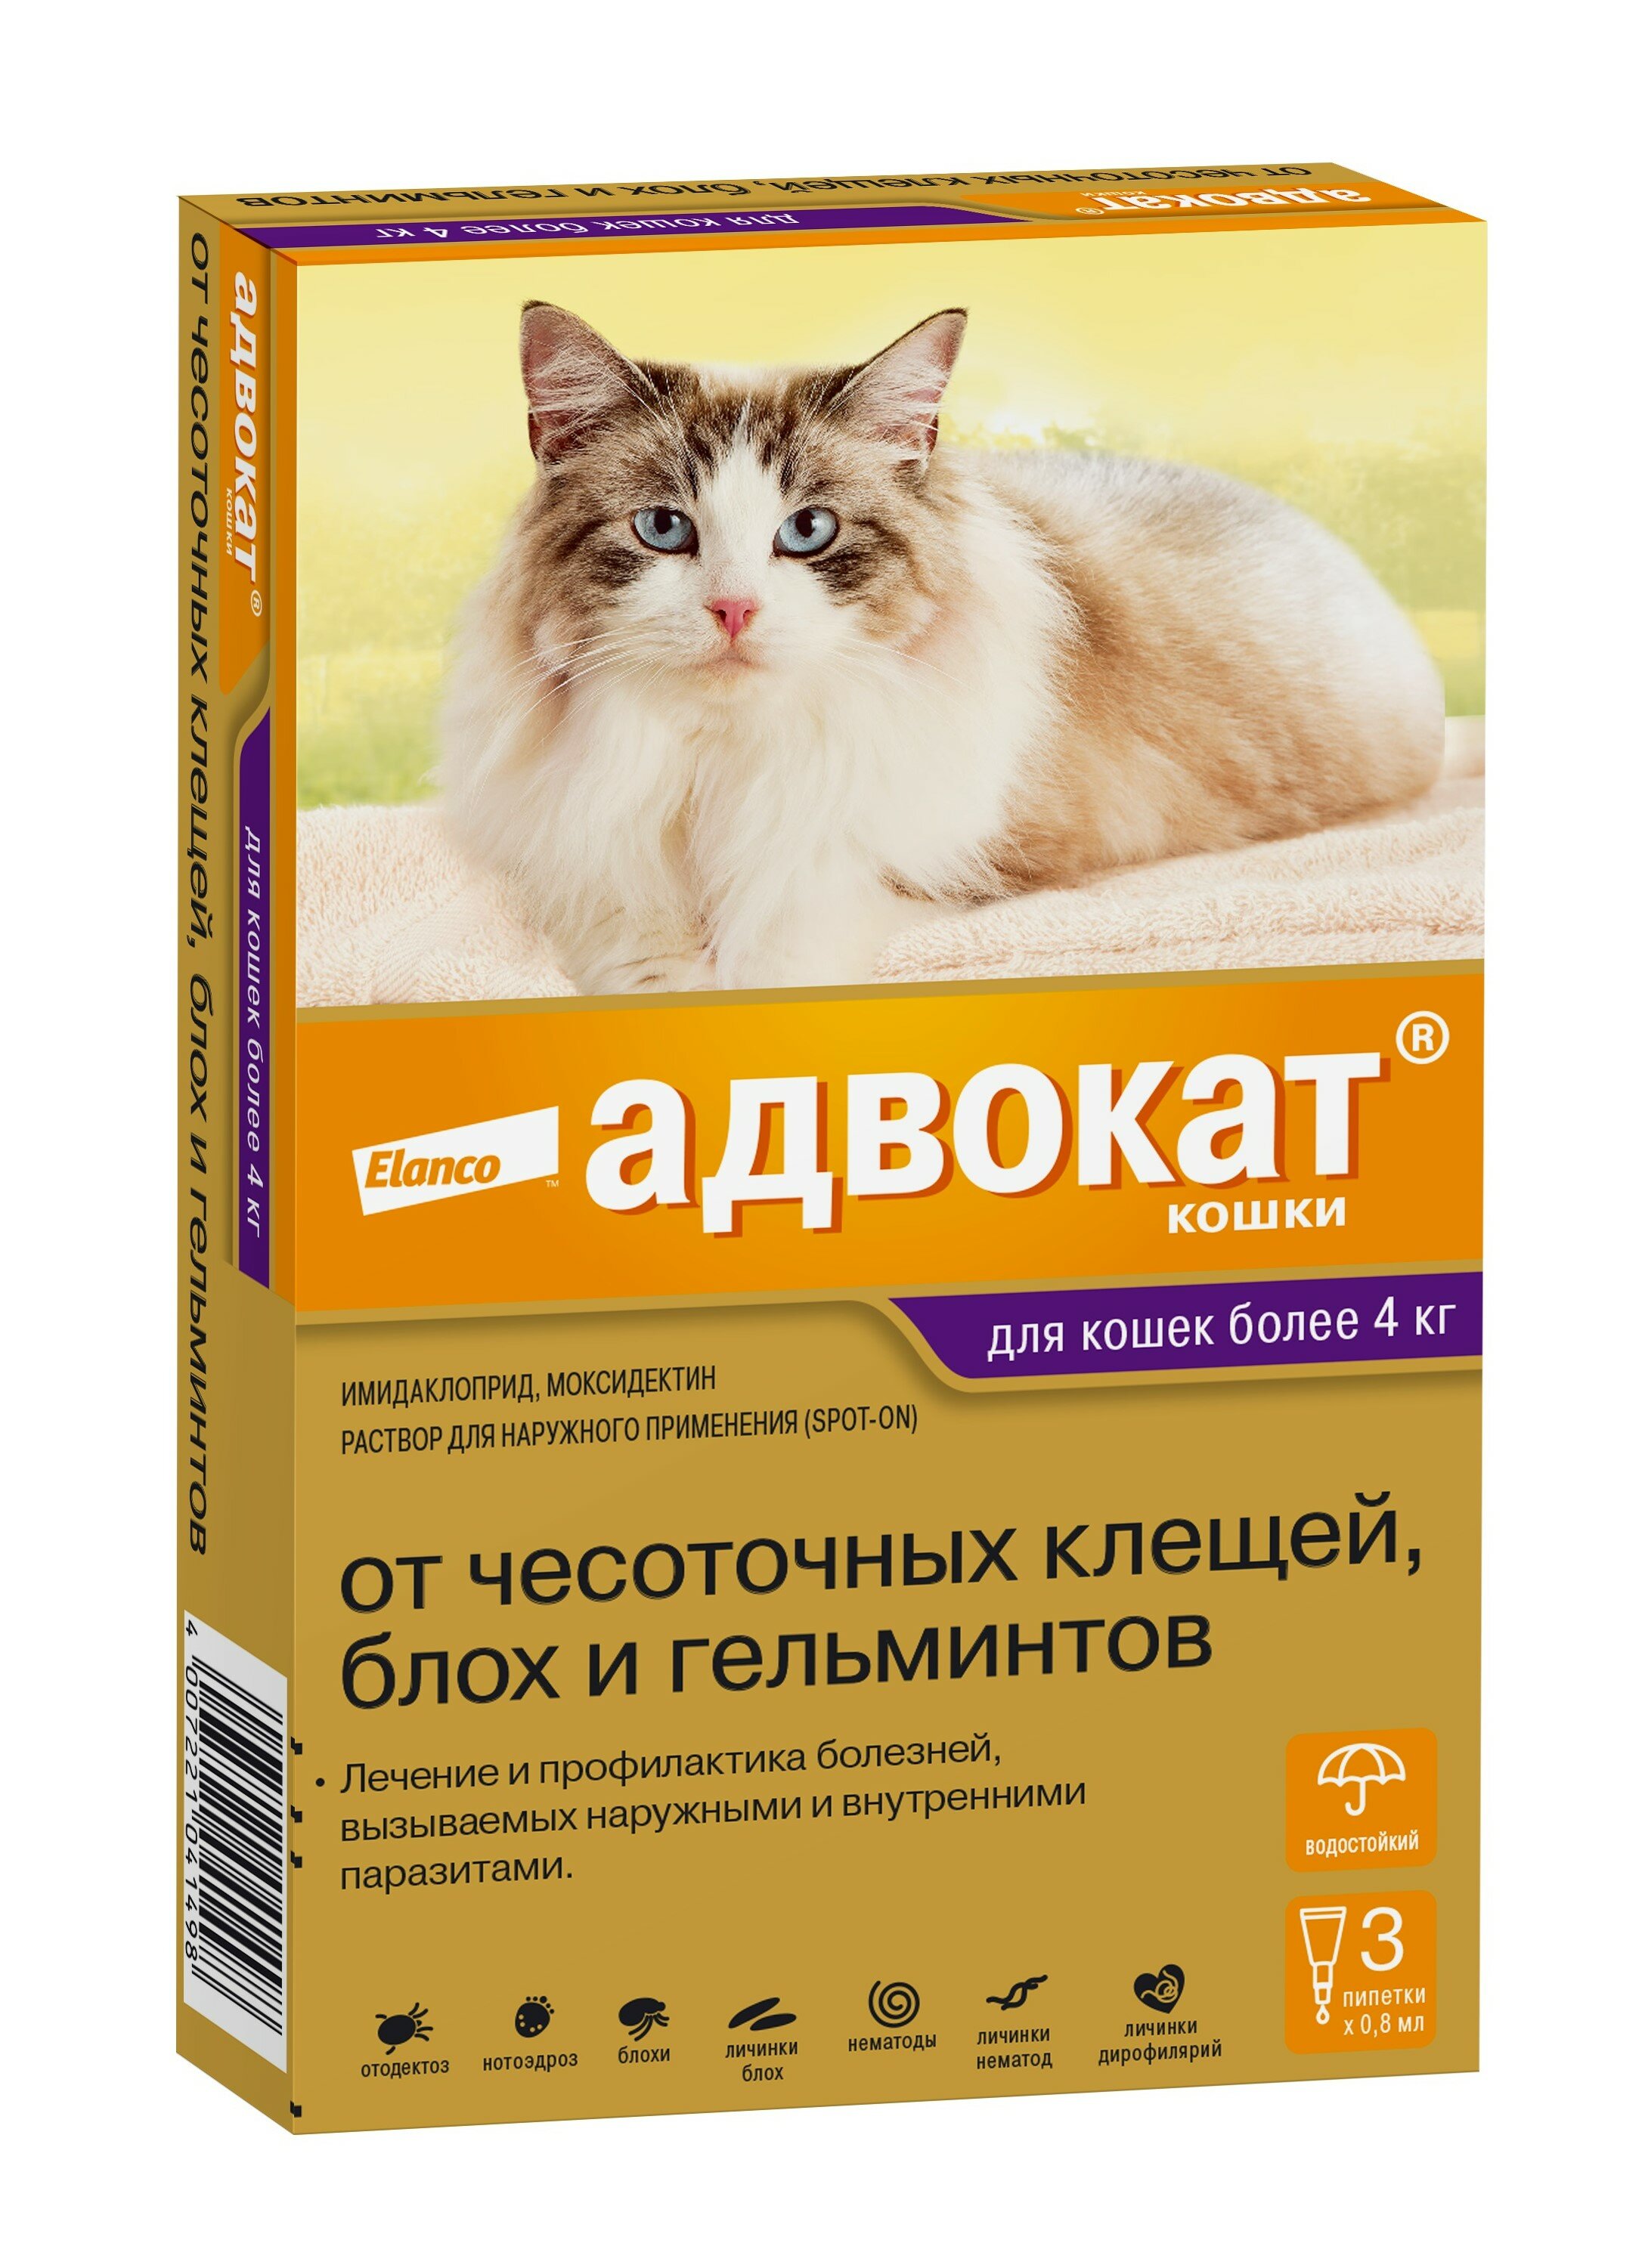 Адвокат антипаразитарный препарат для кошек от 4 кг 3 пипетки по 08 мл